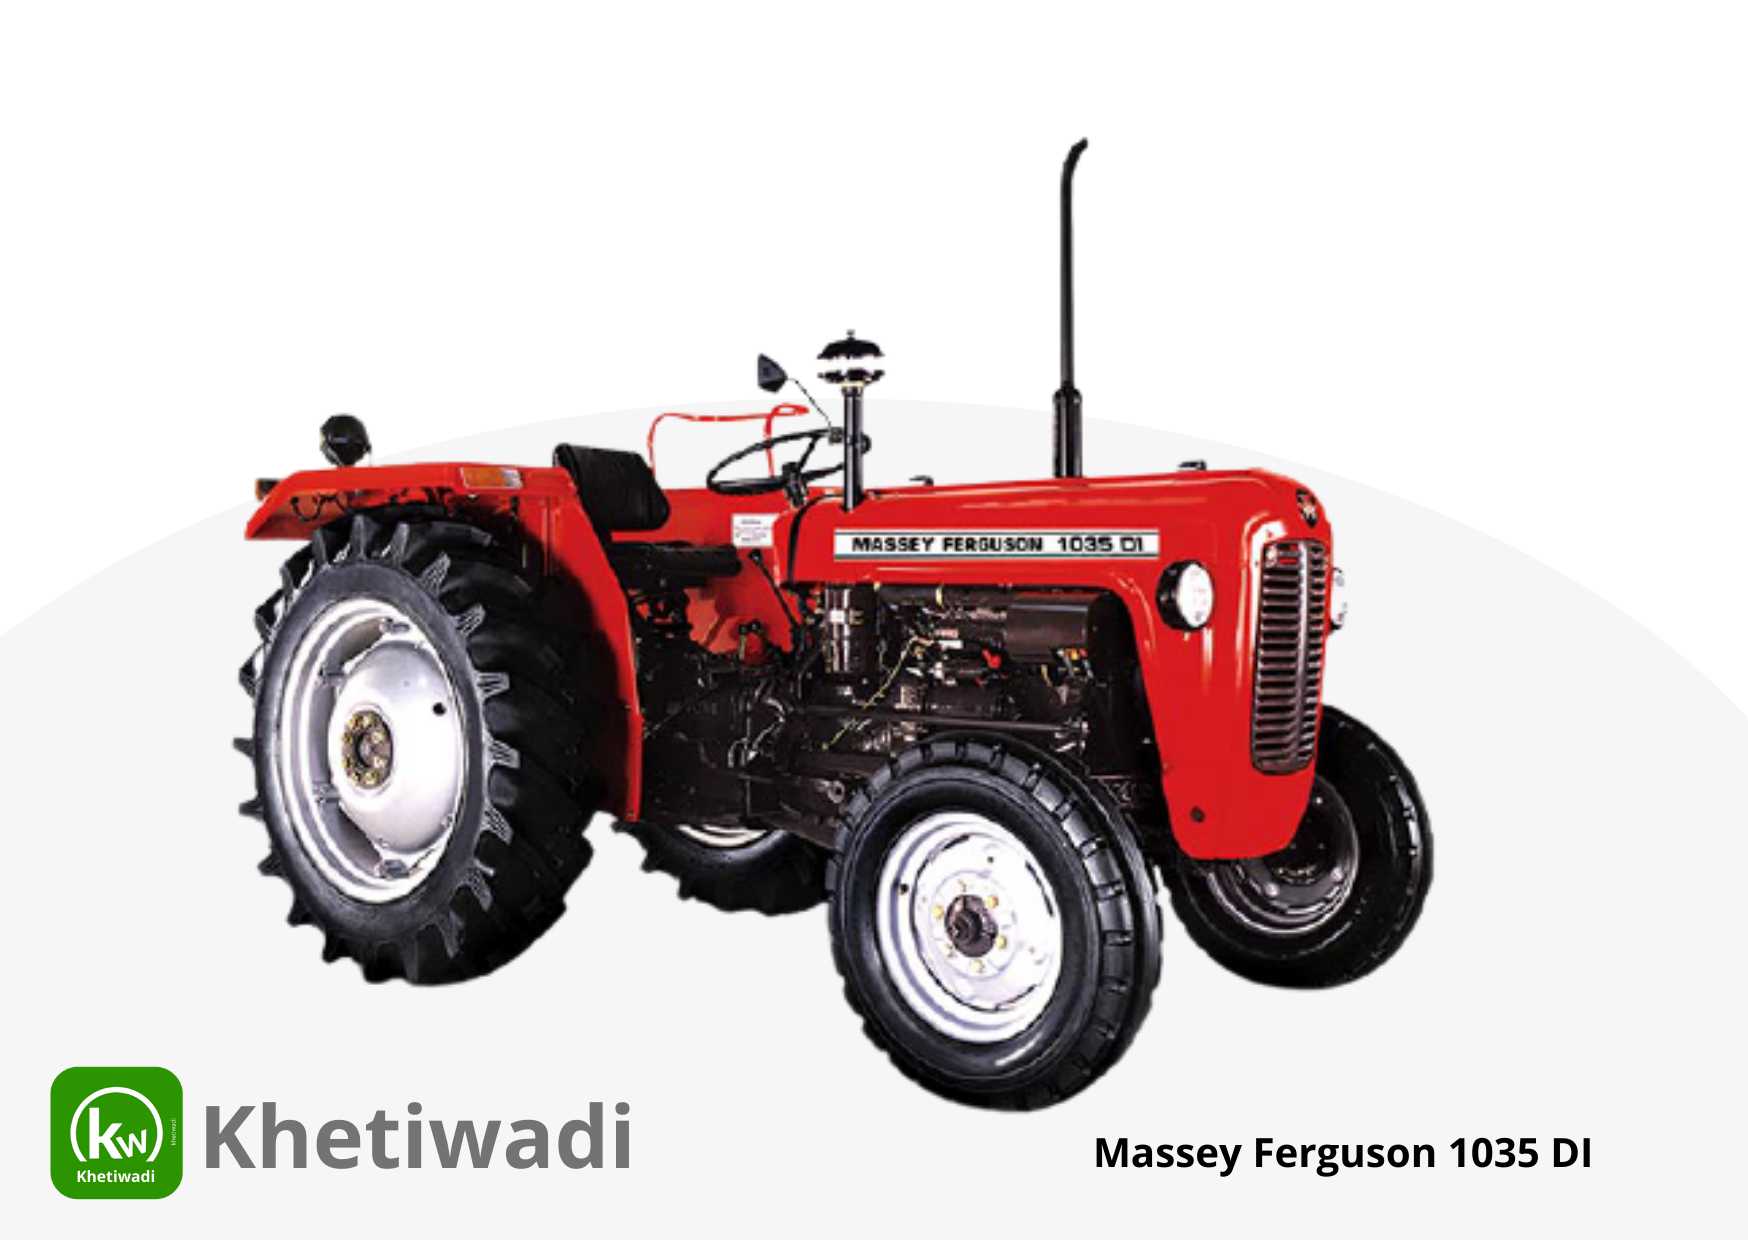 Massey Ferguson 1035 DI image